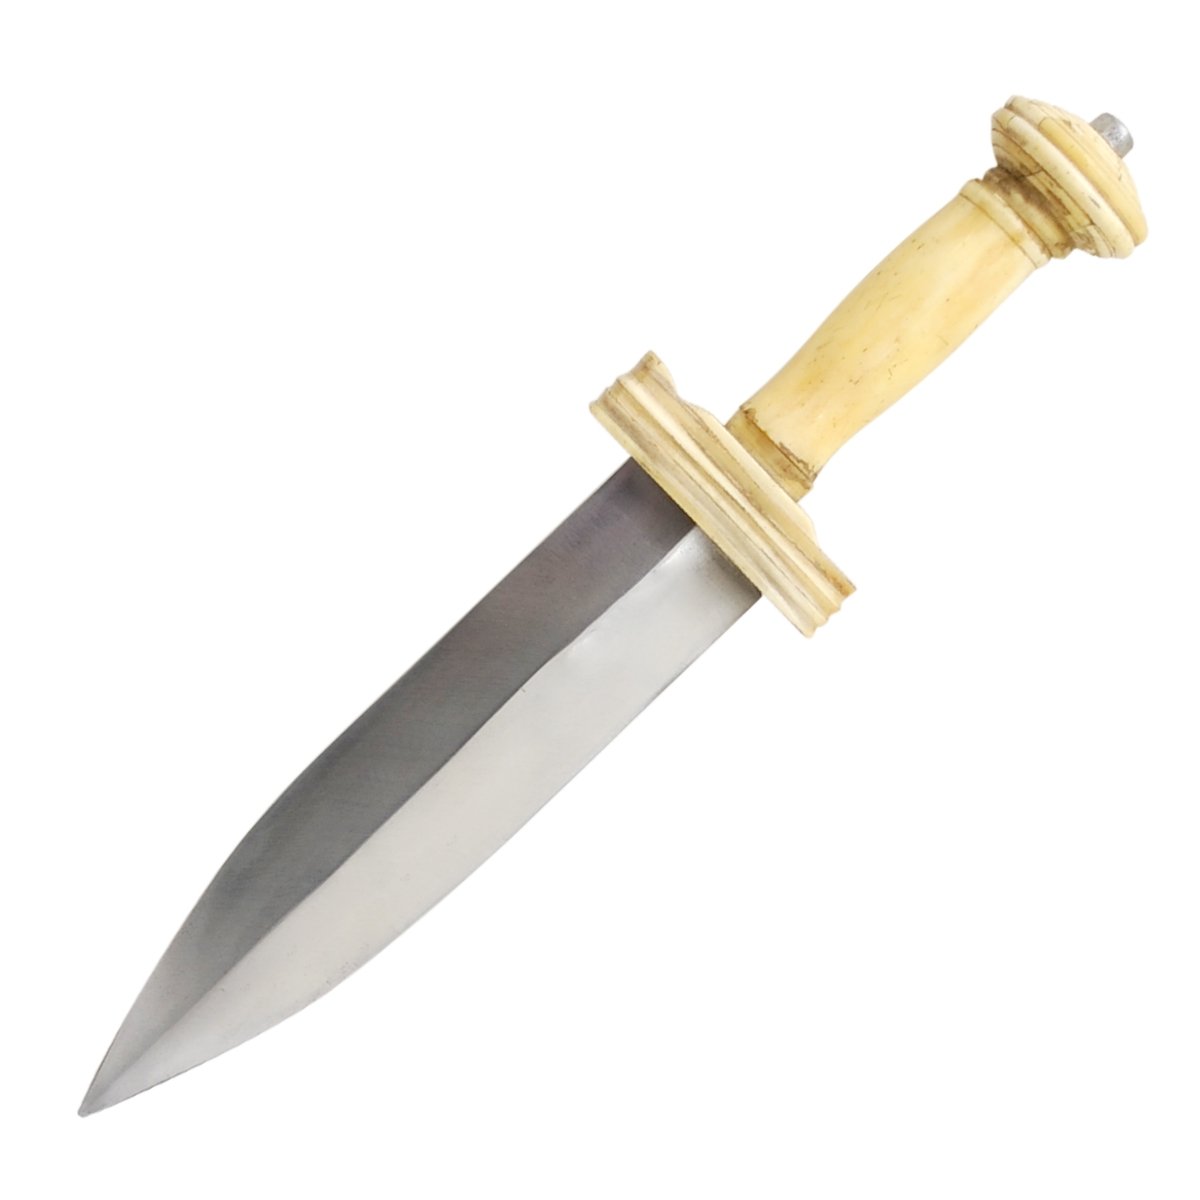 Gladiator dagger